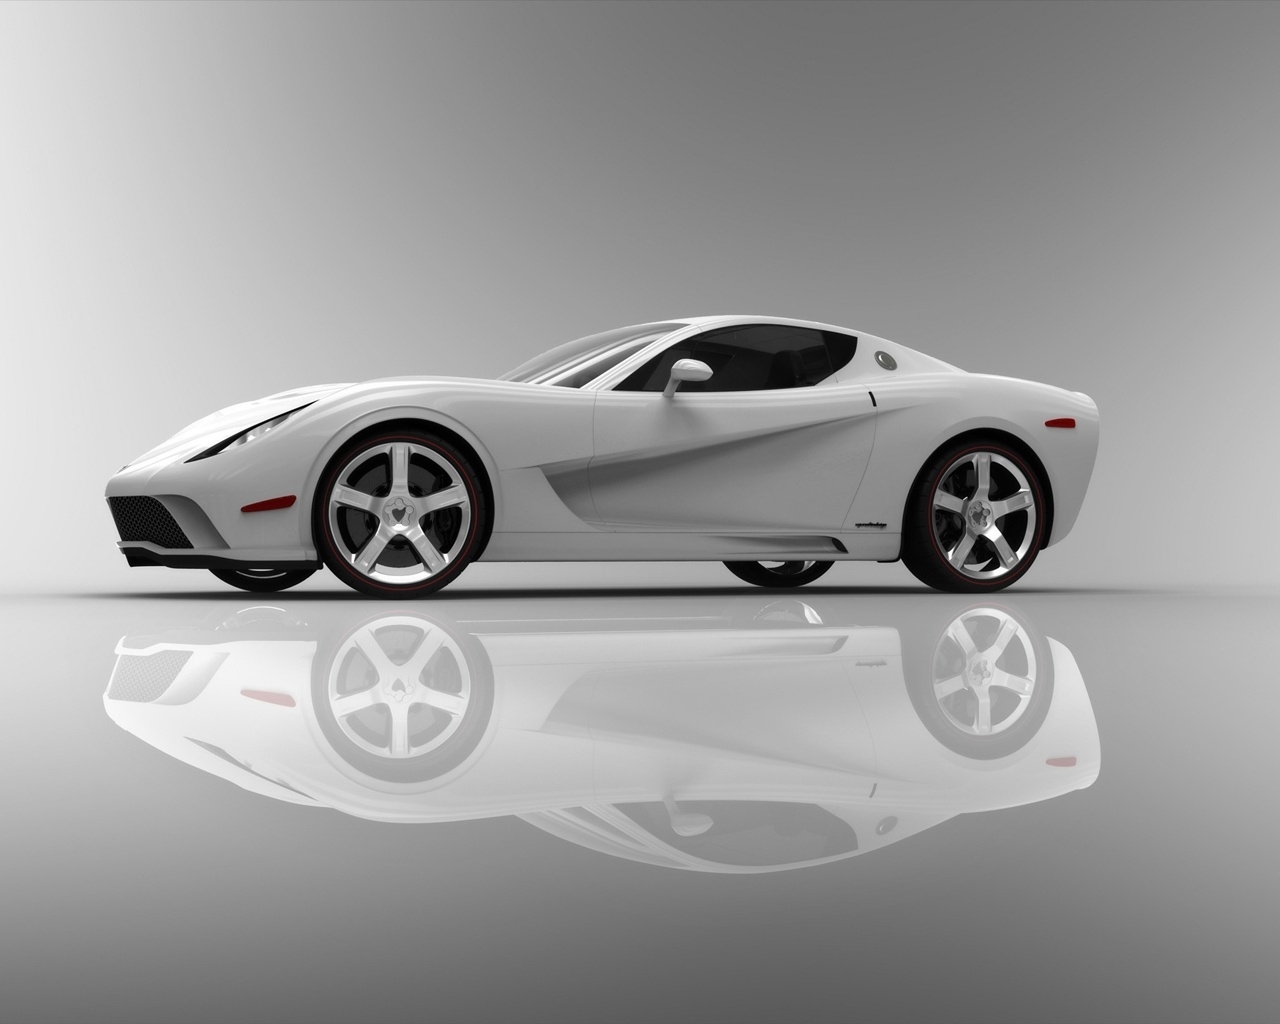 Corvette Z03 2009 White Side Angle for 1280 x 1024 resolution